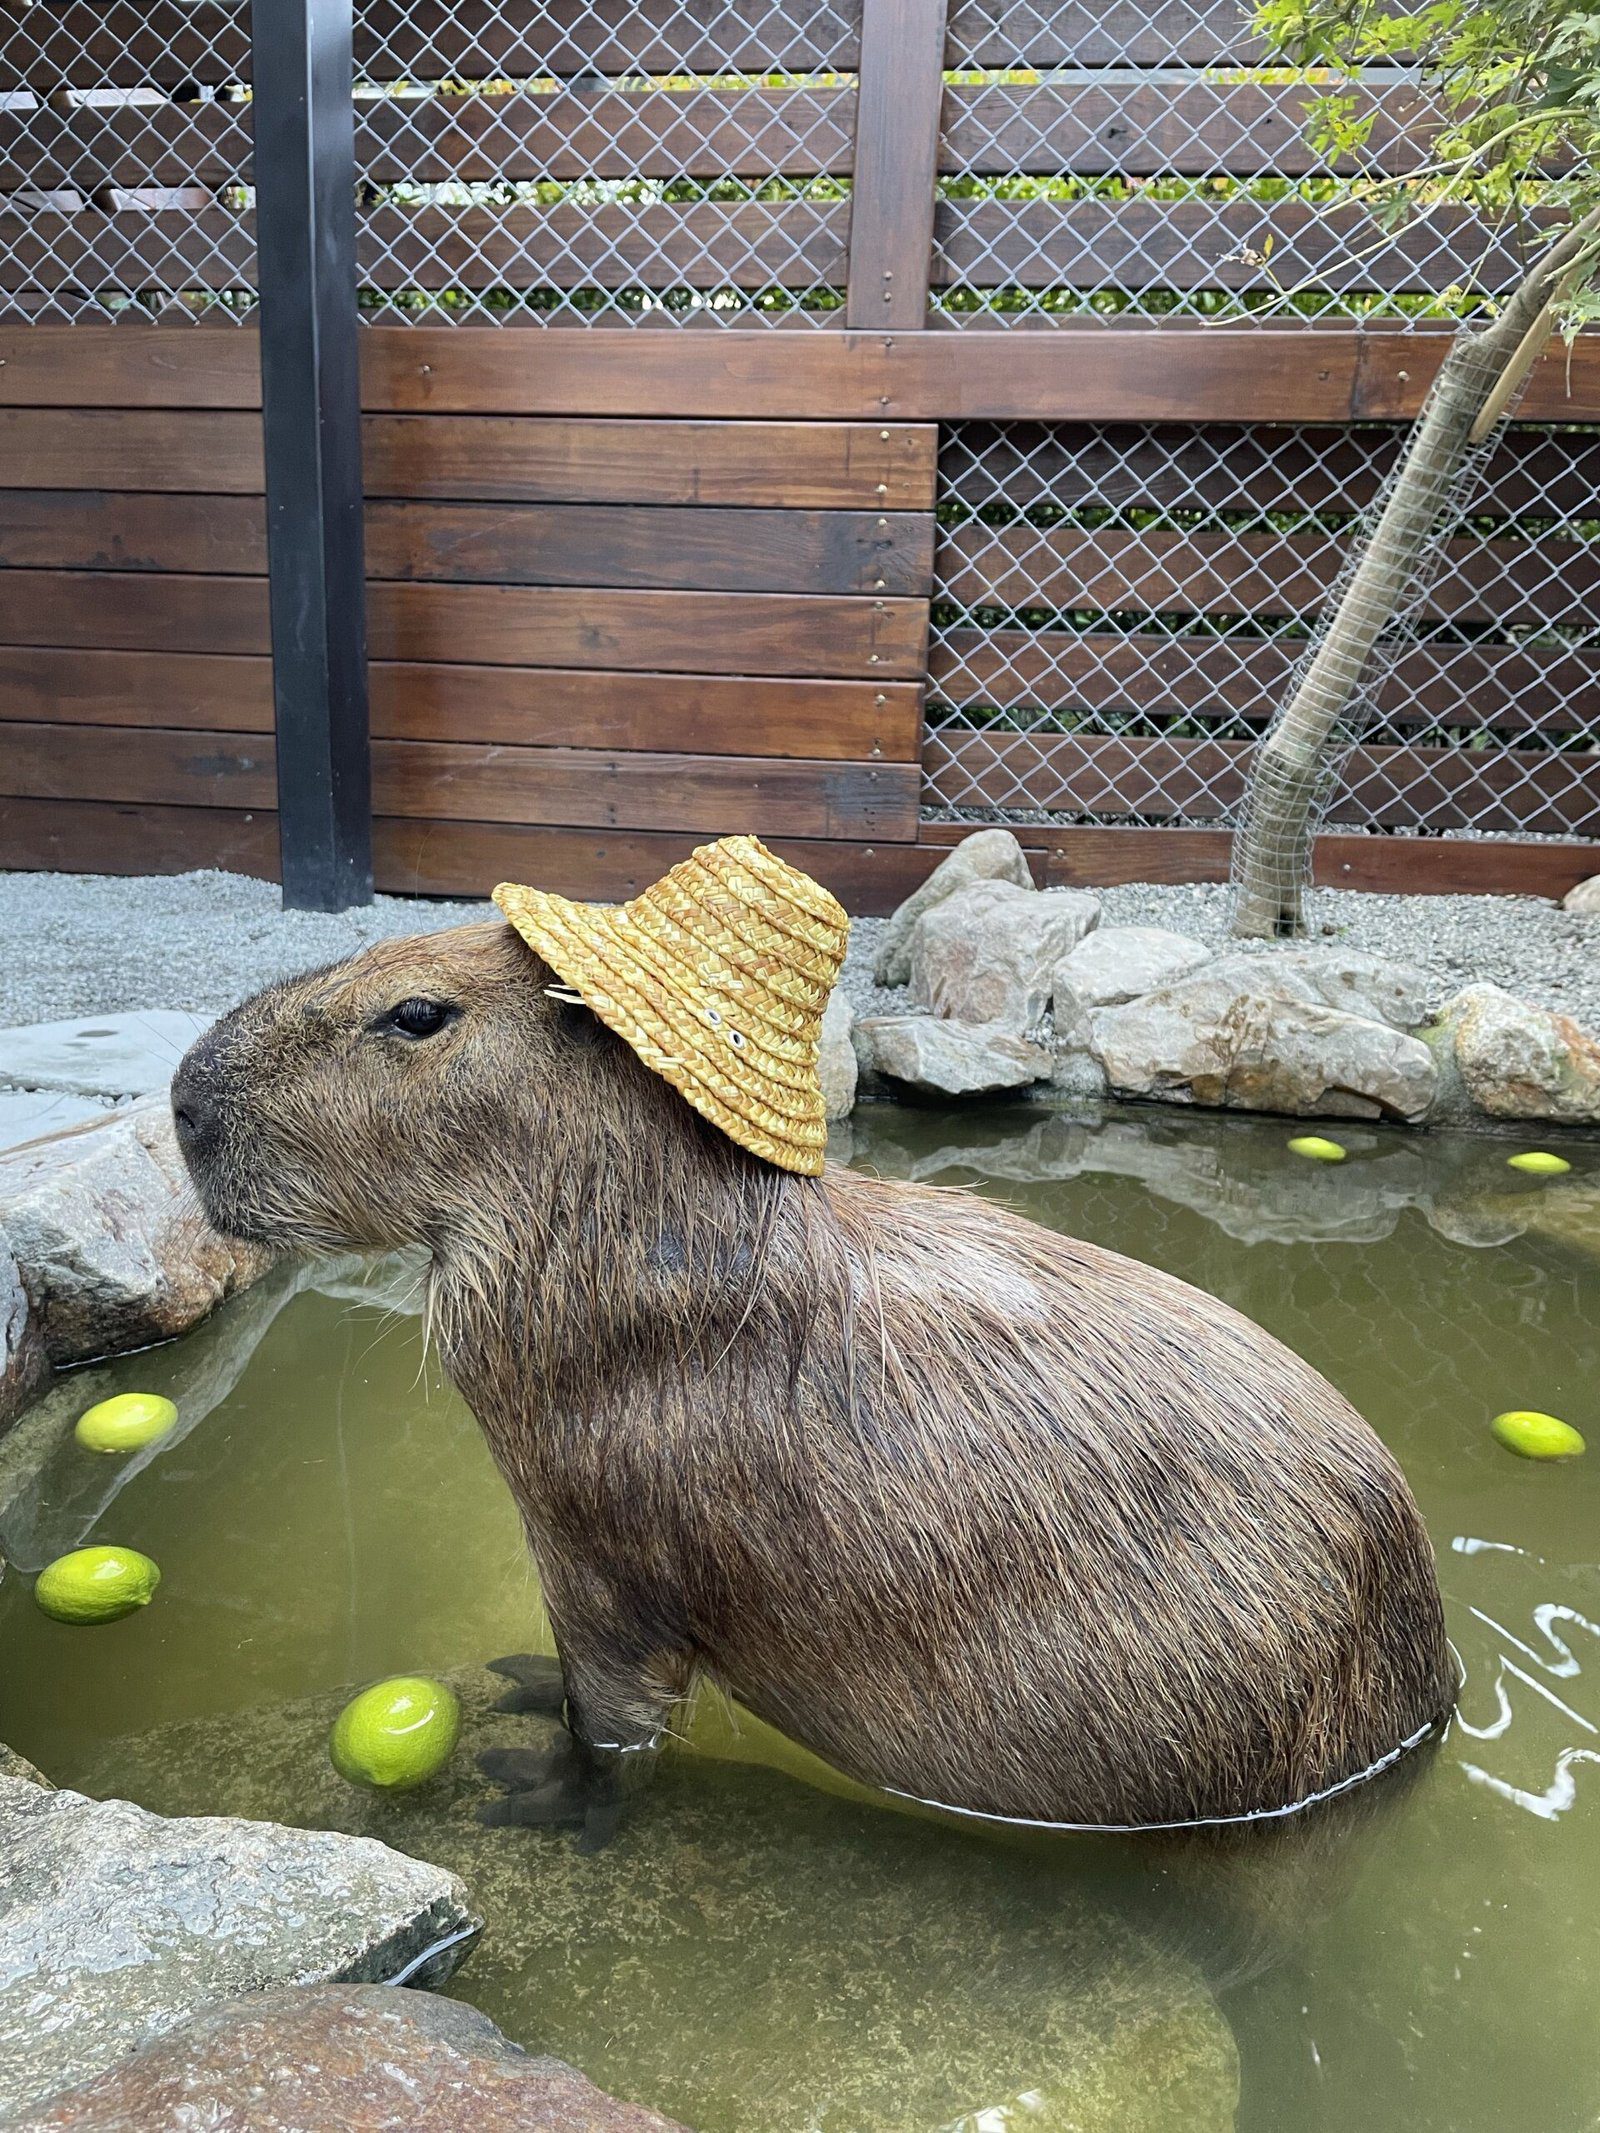 The Unusual Sight of a Wild Capybara in Florida